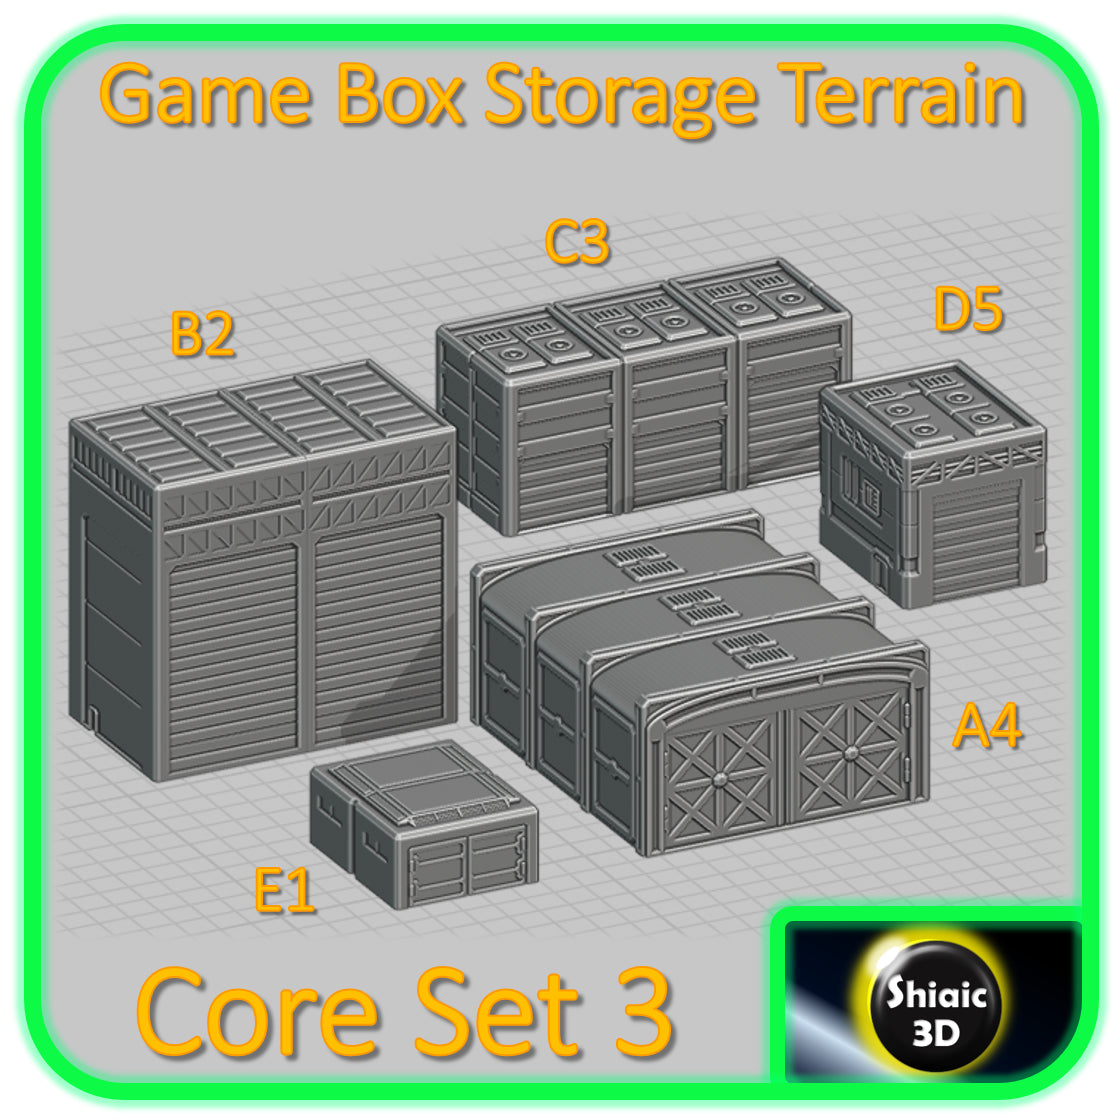 Game Box Storage Terrain